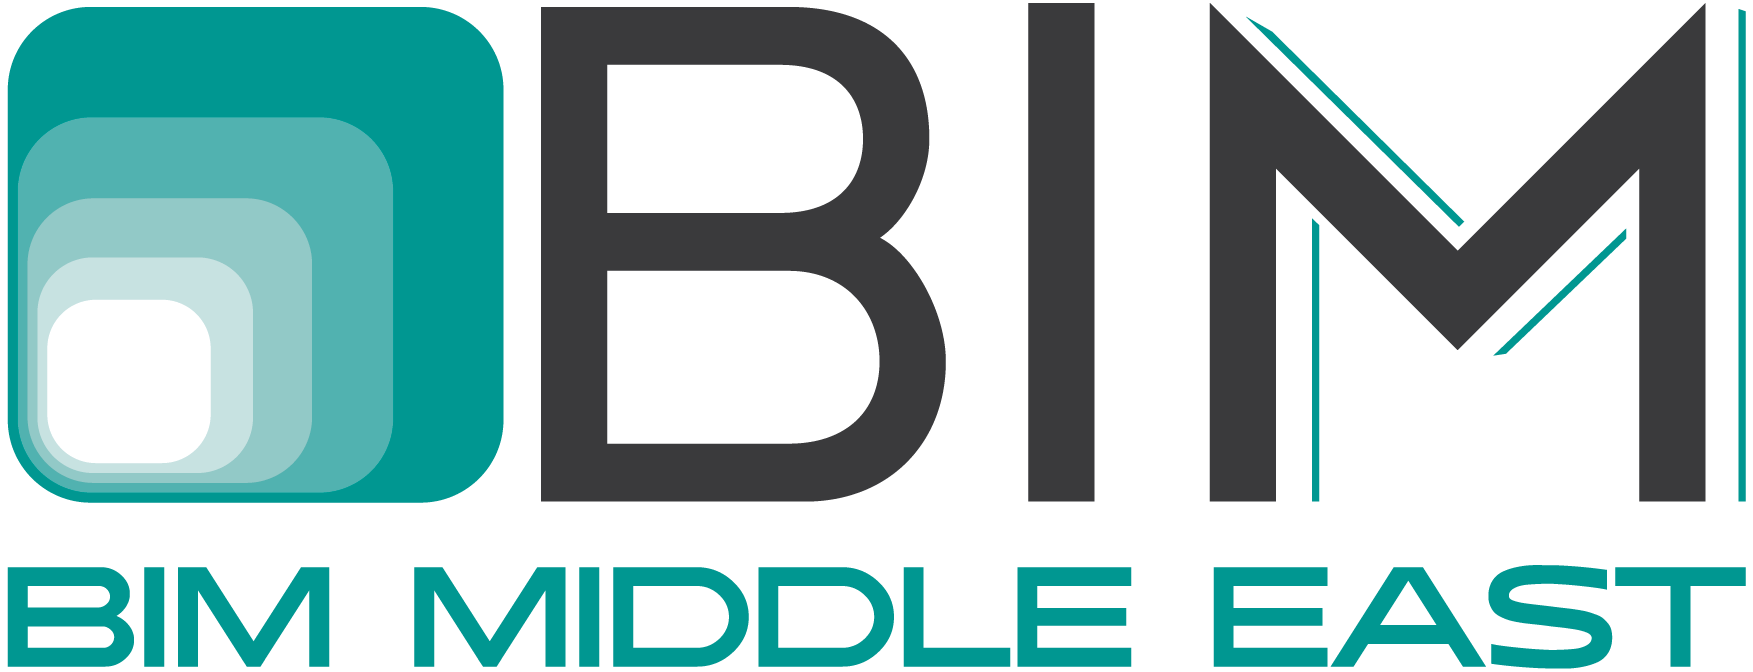 BIM Middle East